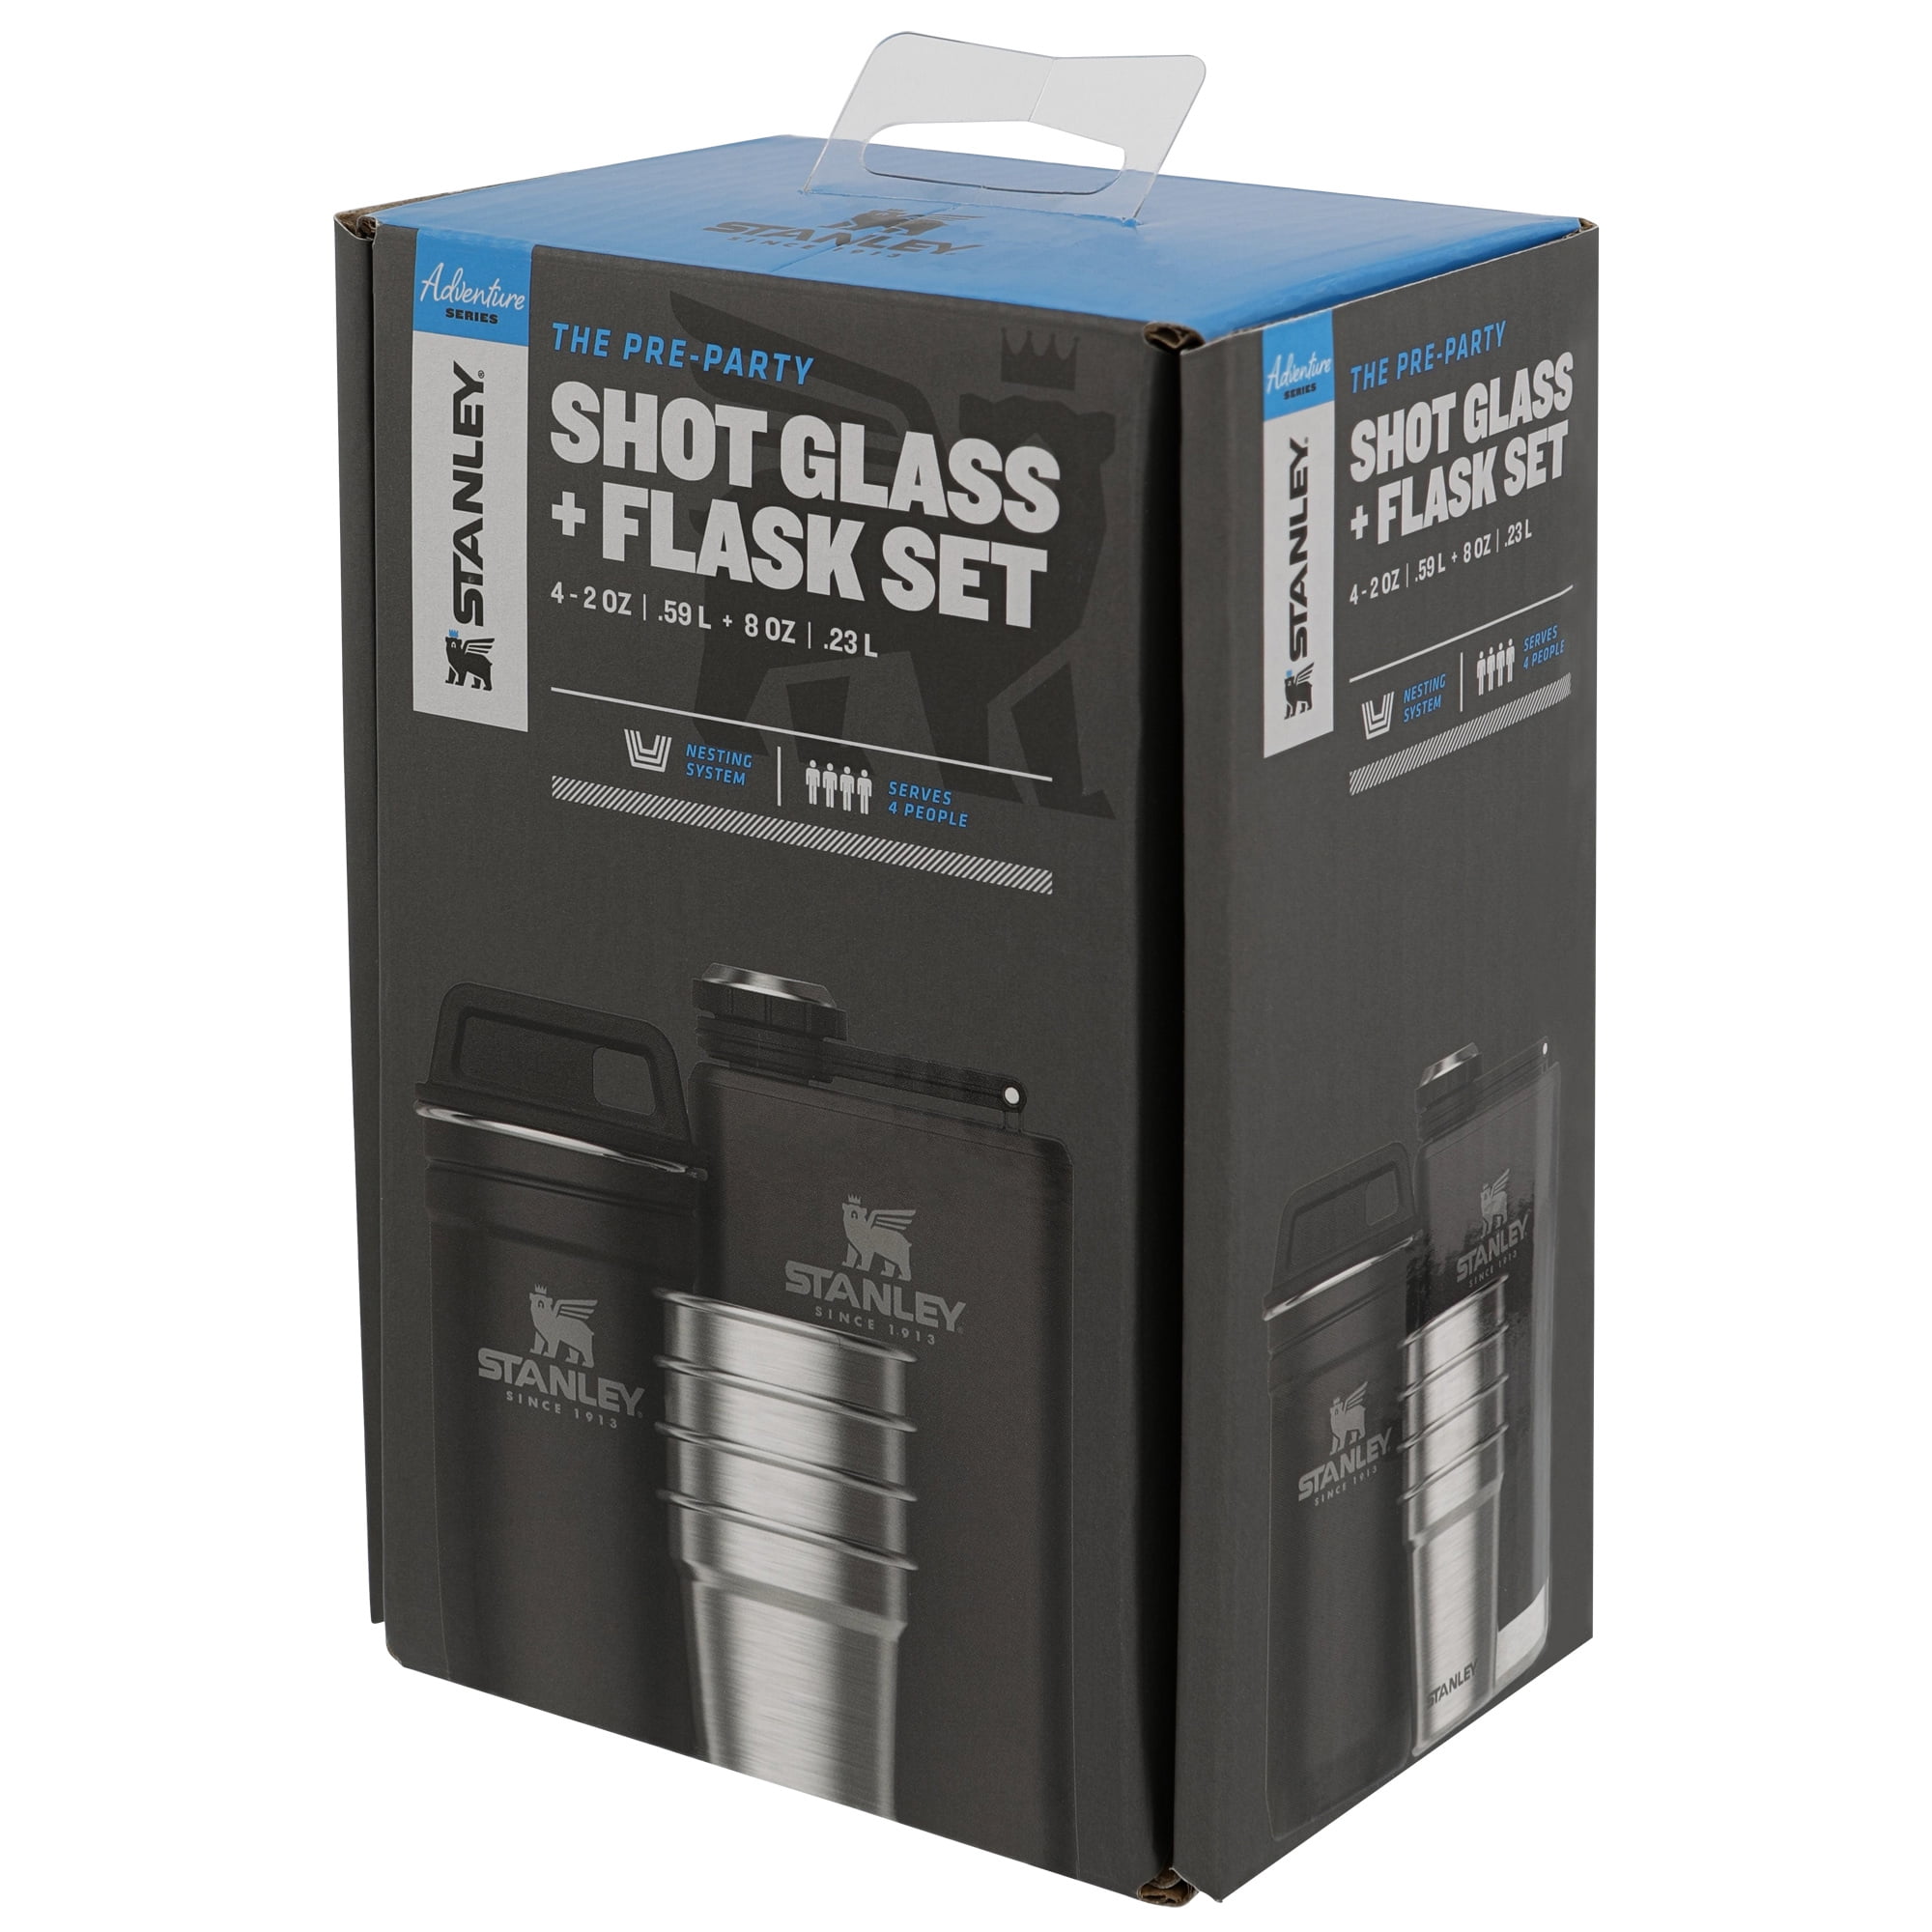  Adventure Pre-Party Shot Glass + Flask Set : Home & Kitchen